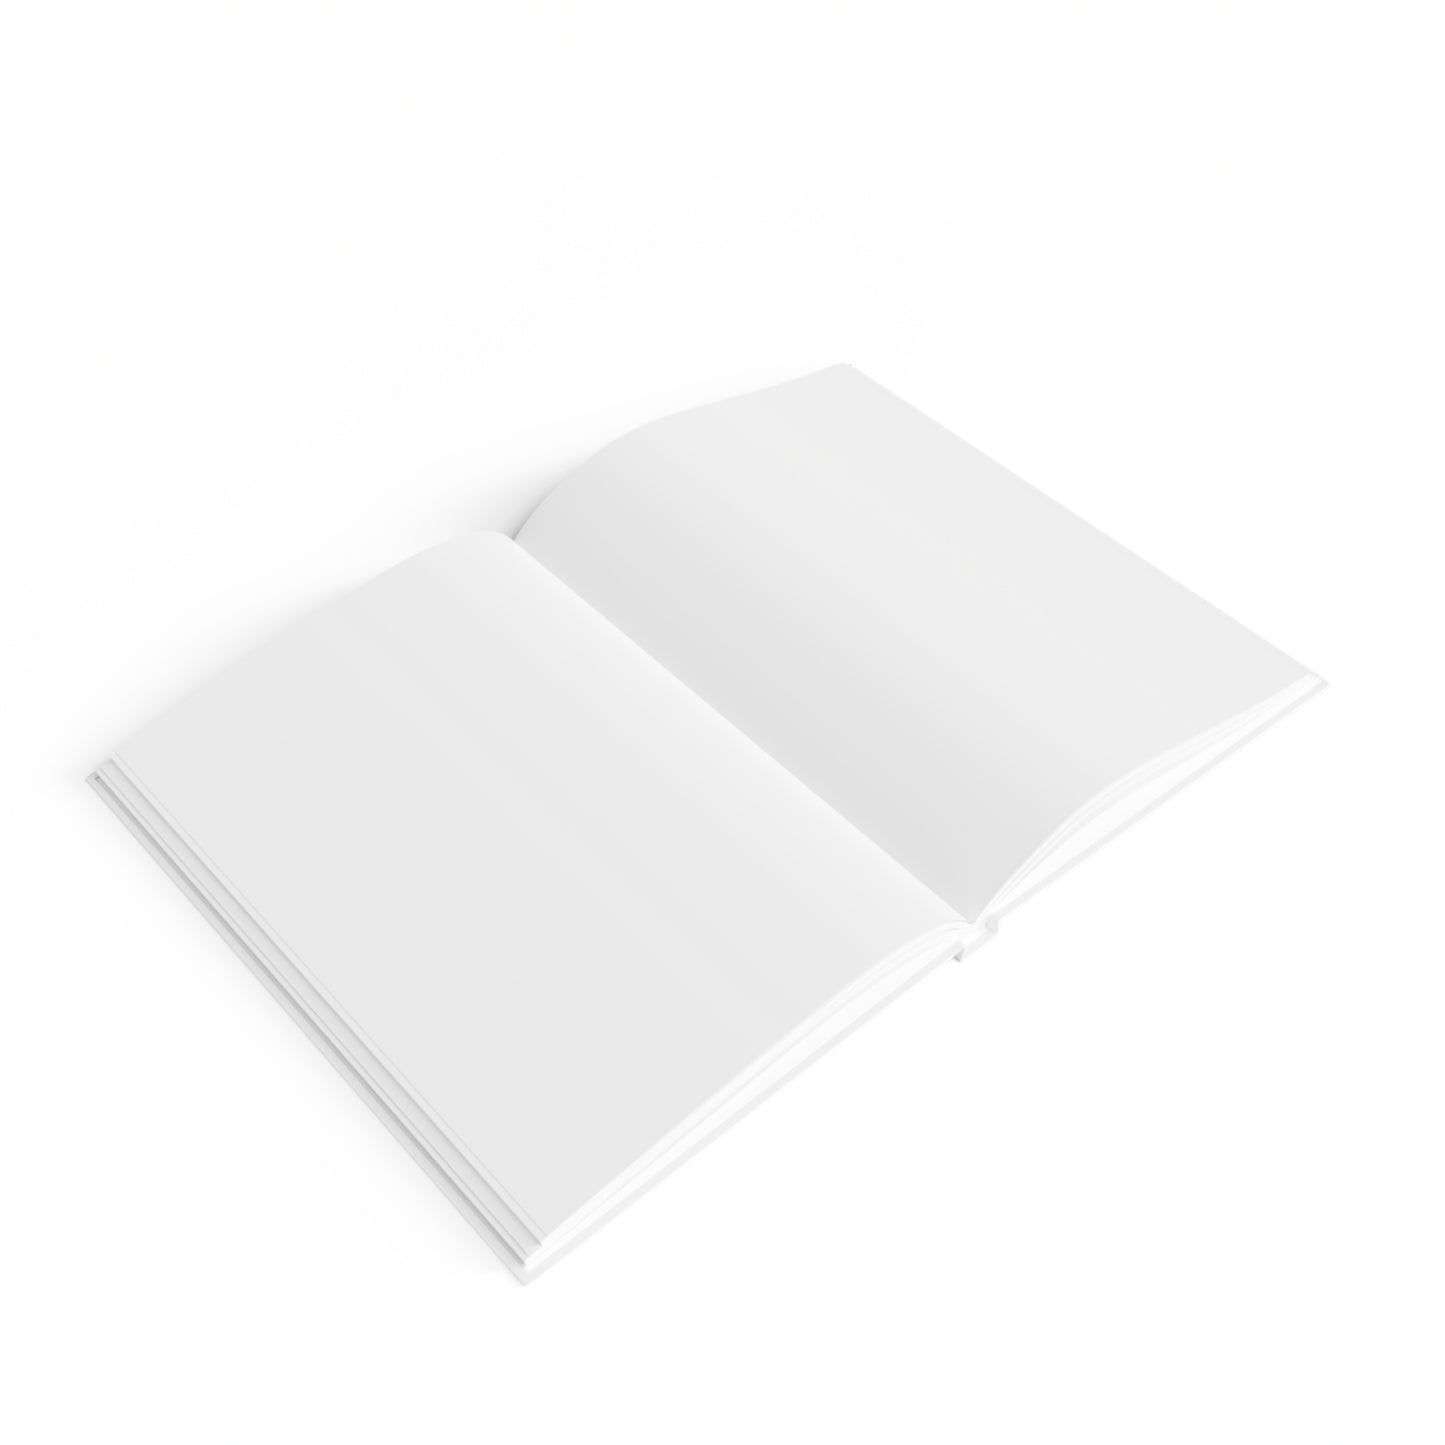 "Versatile Creativity Unleashed: 128-Page Hardcover Blank Journal with Stunning Wraparound Print!"